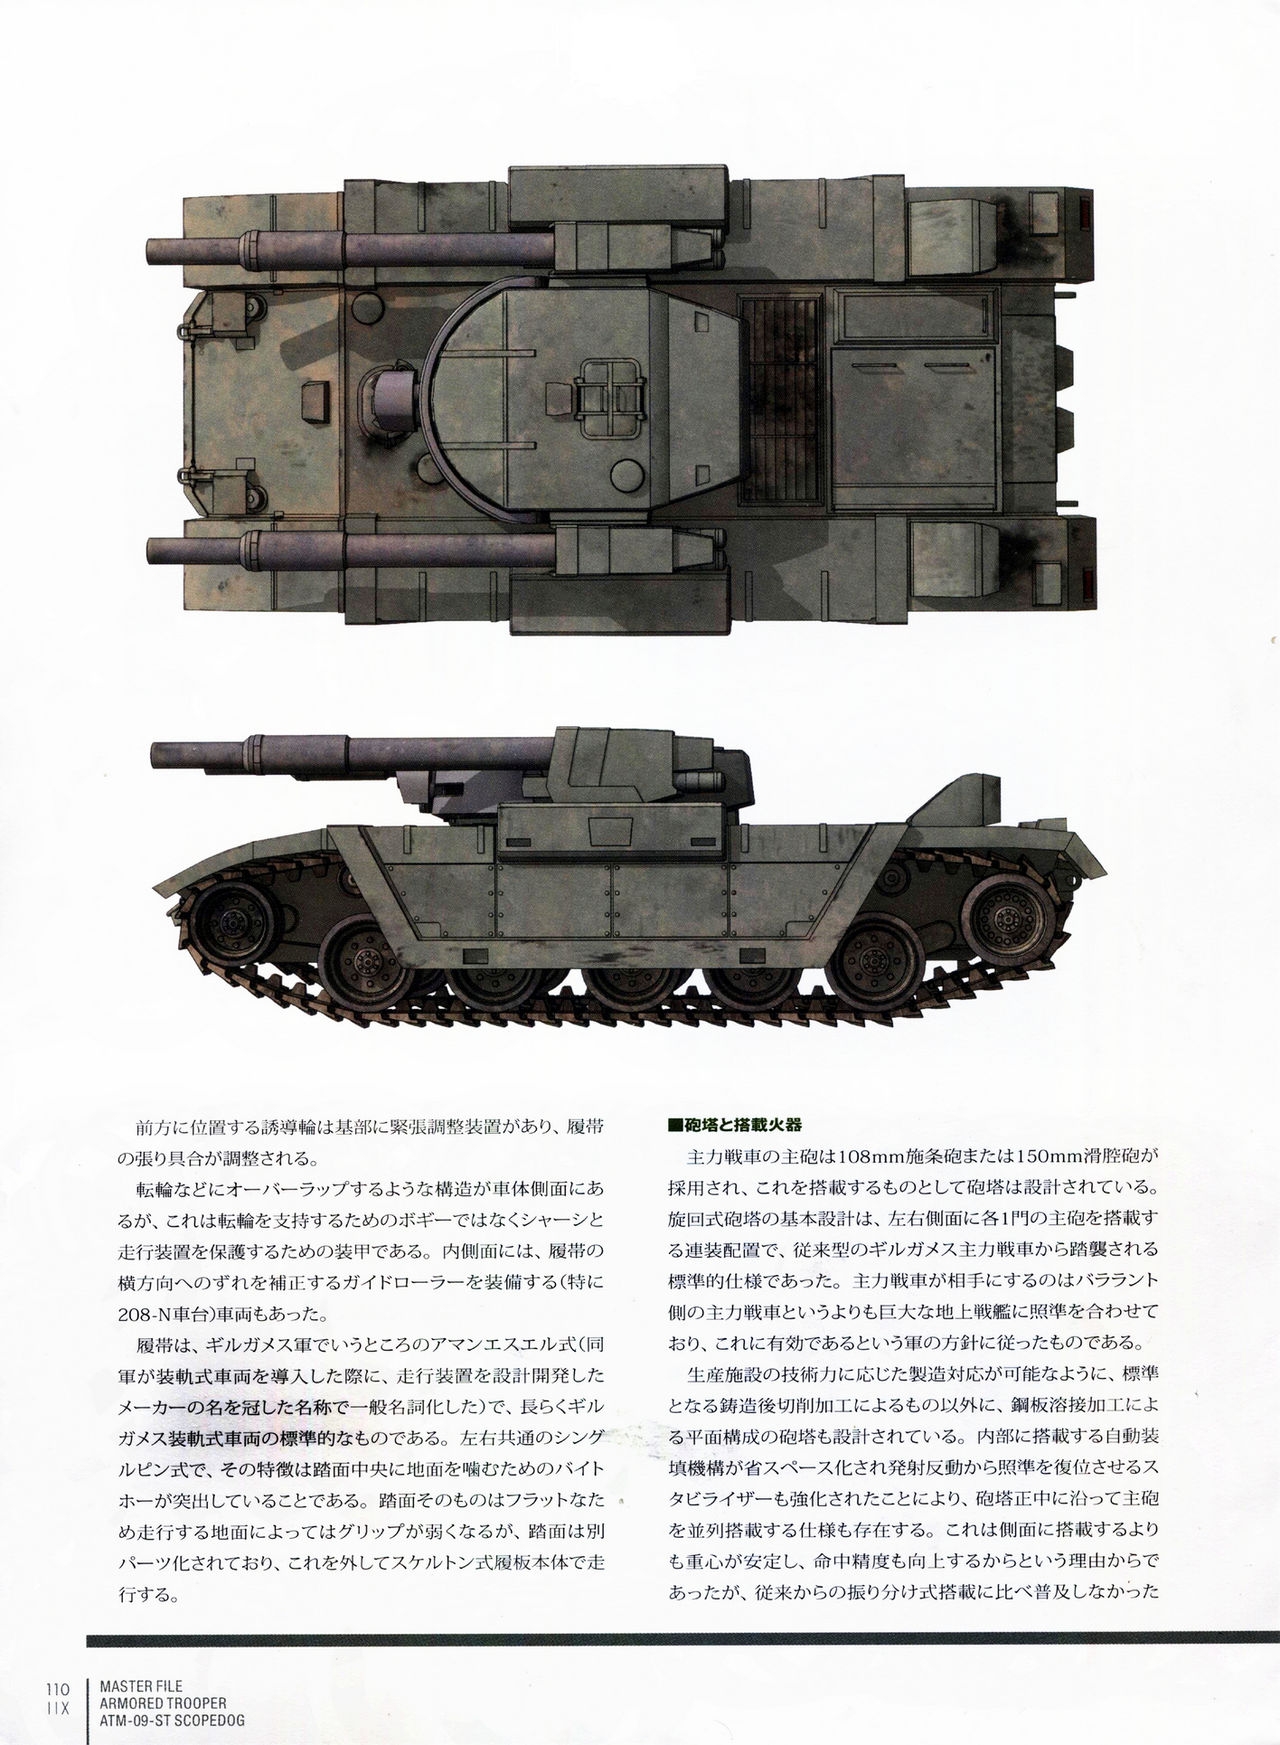 Master File - Armored Trooper AMT-09-ST Scopedog 113